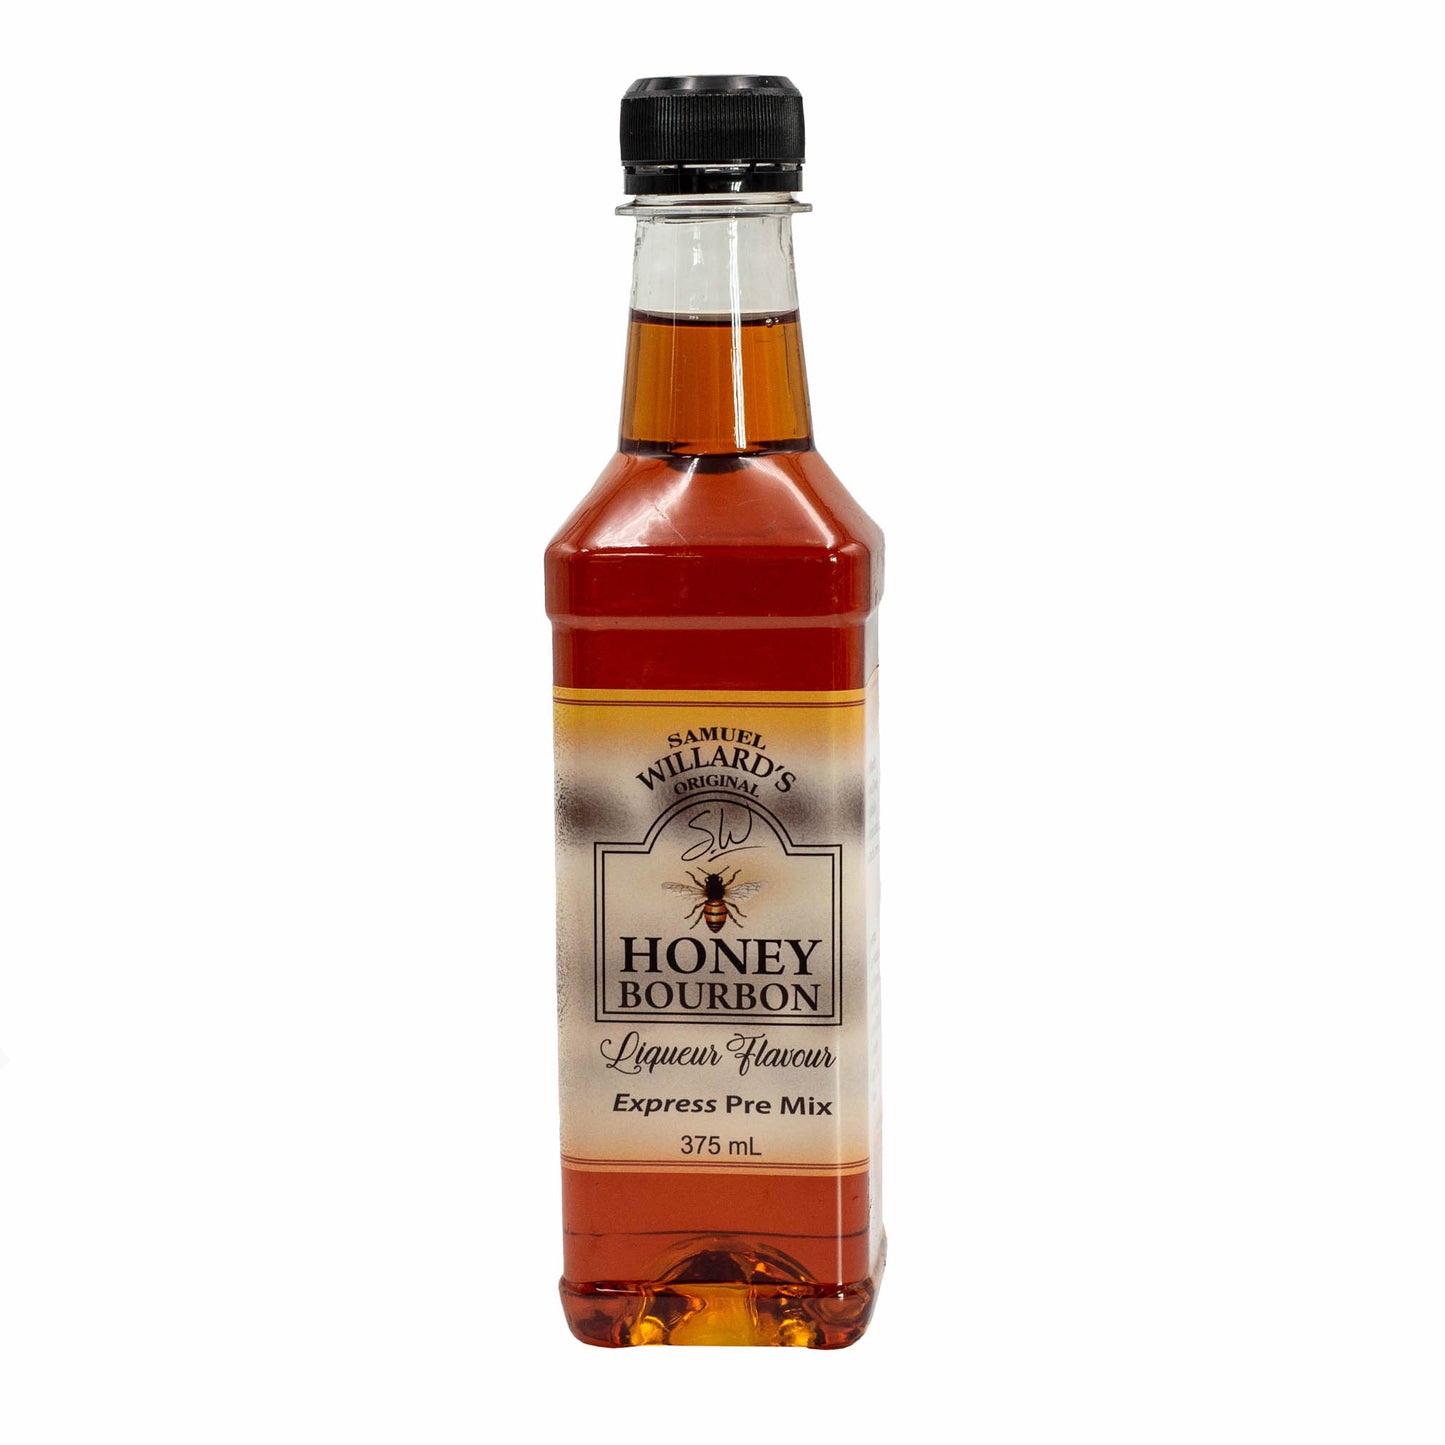 Samuel Willards Honey Bourbon premix. Will make 1125ml of finished product from each 375ml bottle